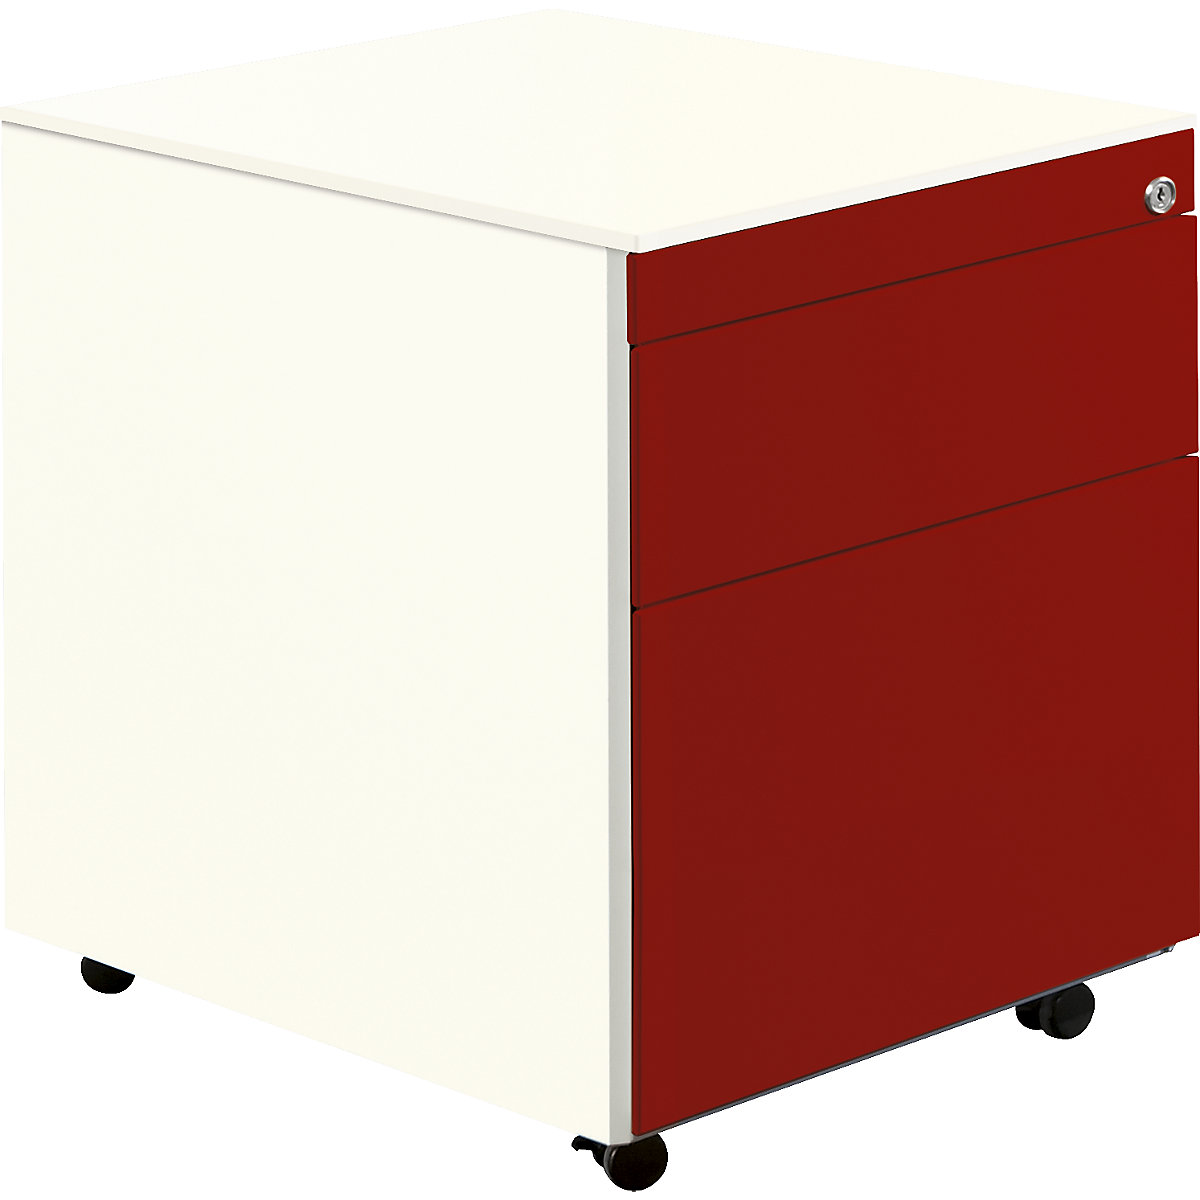 Buck rodante – mauser, H x P 570 x 600 mm, 1 cajón para material, 1 archivador colgante, blanco puro / rojo rubí / blanco puro-9